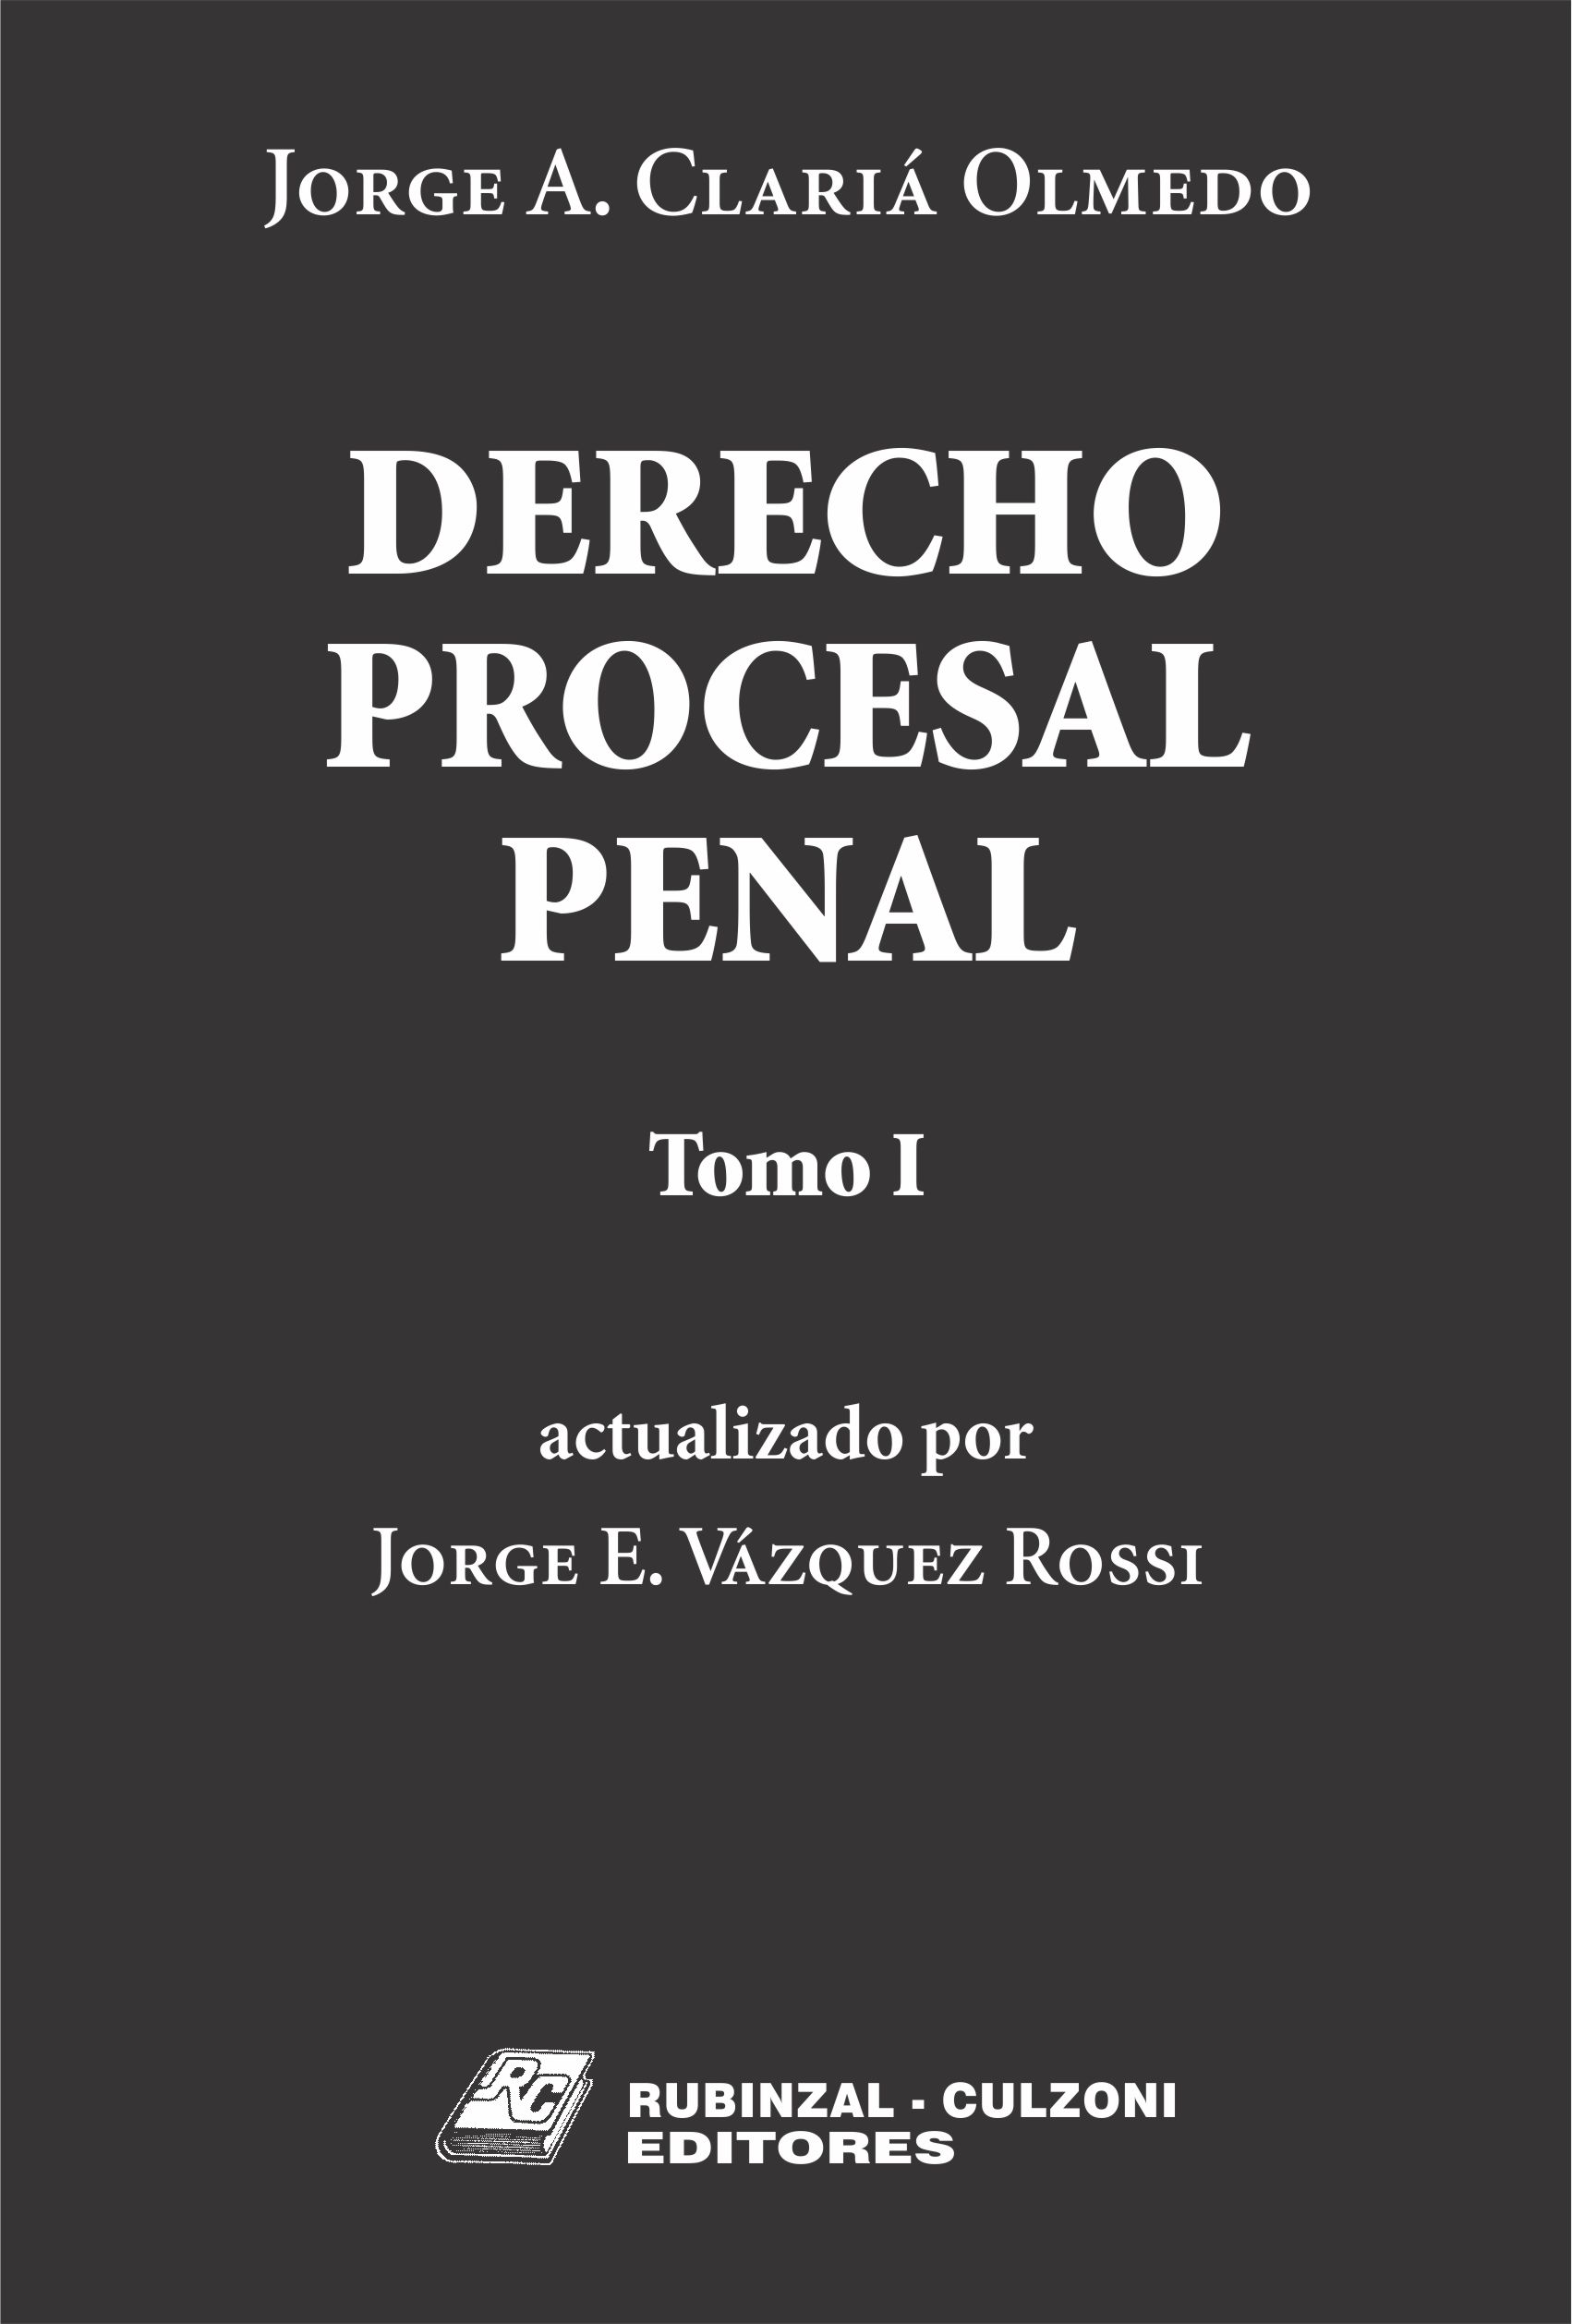 Derecho Procesal Penal. - Tomo I (Actualizado por Jorge E. Vázquez Rossi).